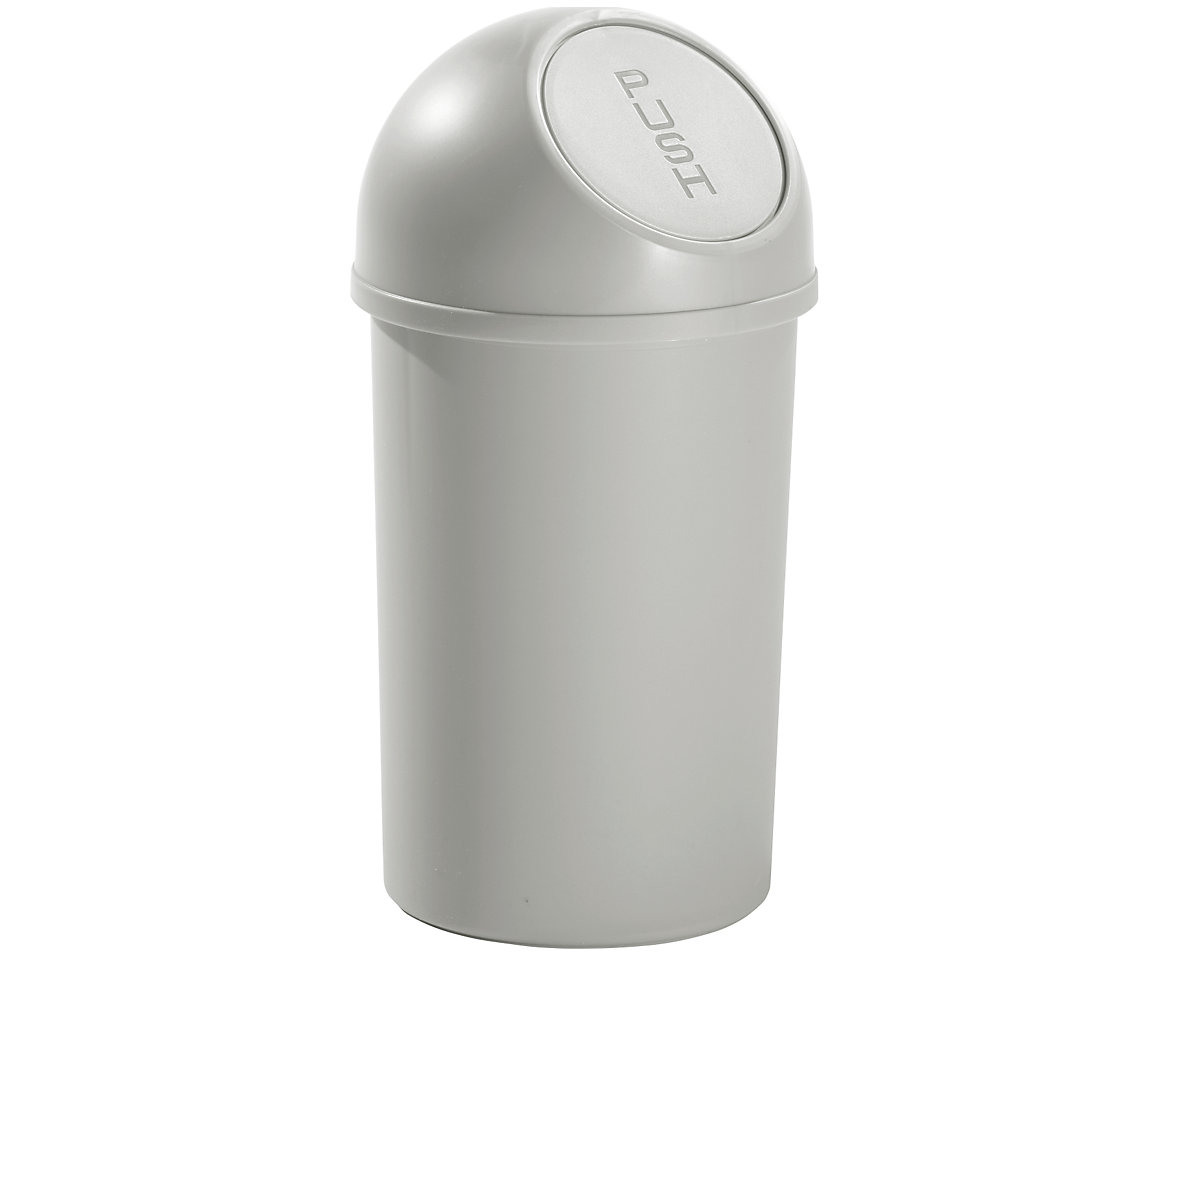 Recipiente de lixo Push em plástico – helit, capacidade 13 l, embalagem de 6 unid., AxØ 490 x 252 mm, cinzento claro-6